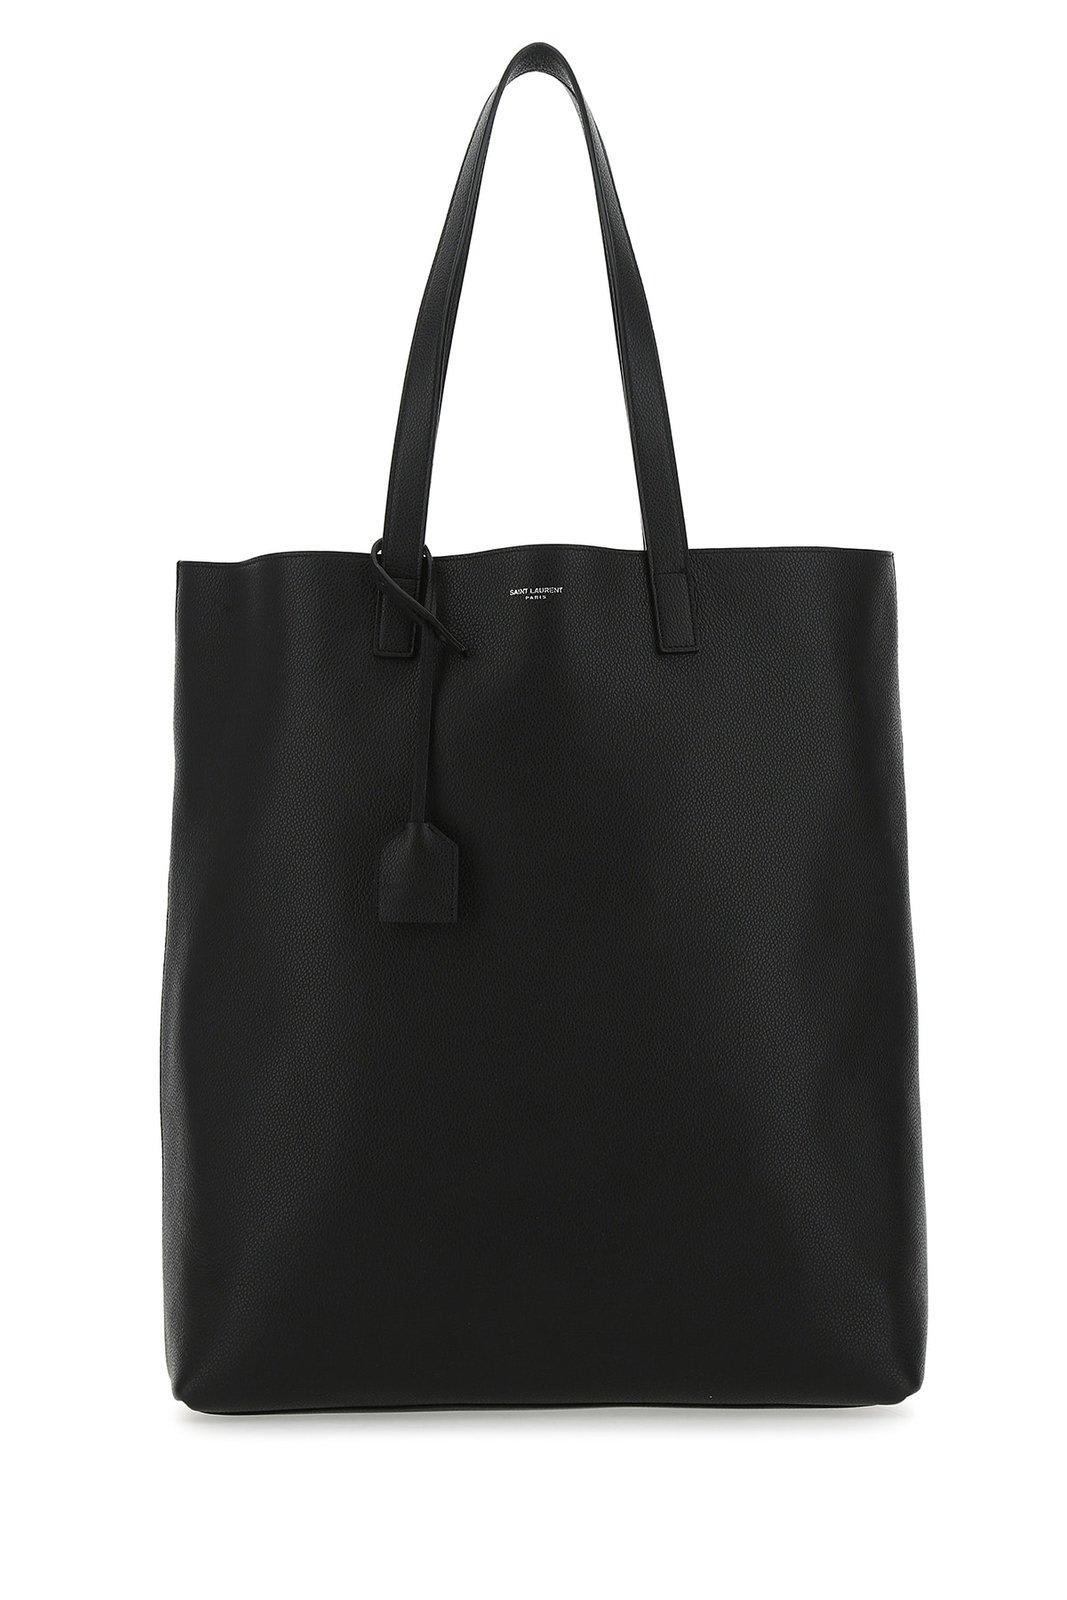 Saint Laurent logo-detail leather tote bag - Black